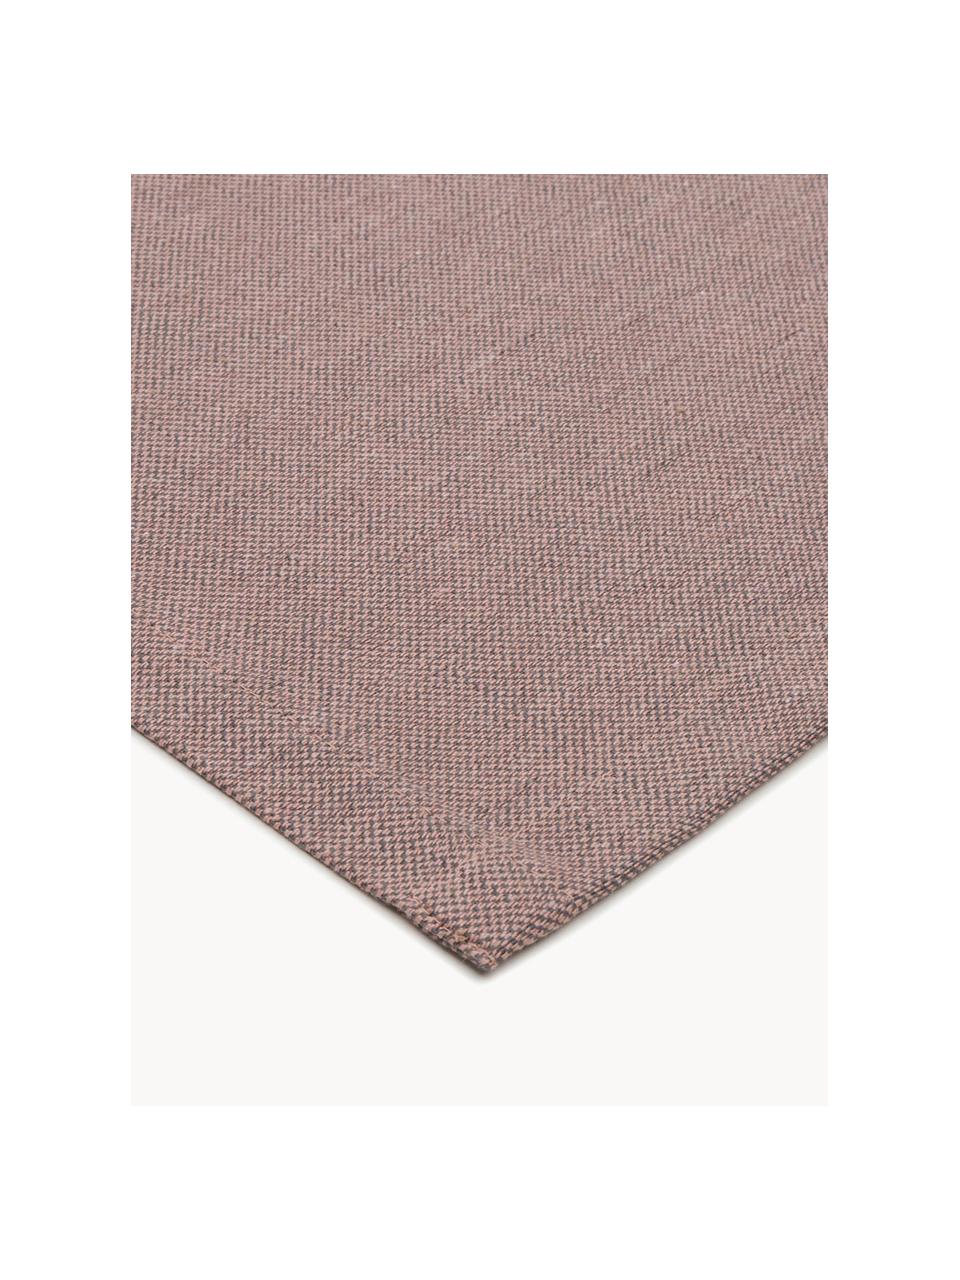 Chemin de table Riva, 55 % coton, 45 % polyester

Le matériau est certifié STANDARD 100 OEKO-TEX®, 14.HIN.40536, HOHENSTEIN HTTI, Vieux rose, larg. 40 x long. 150 cm